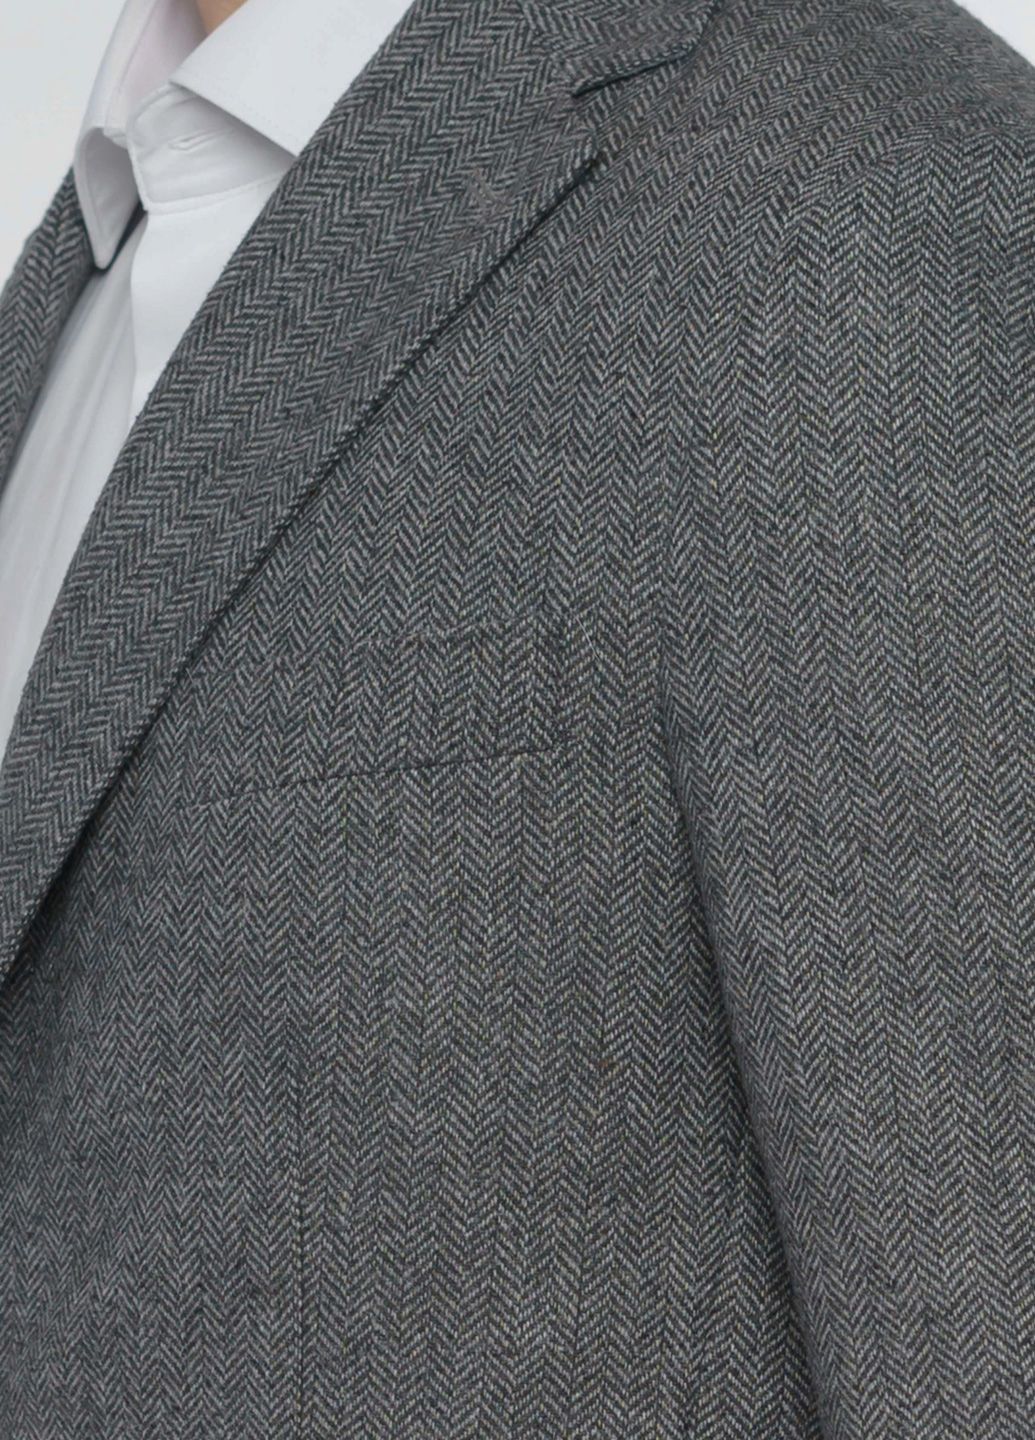 Пиджак мужской серый Arber napoli (280898617)